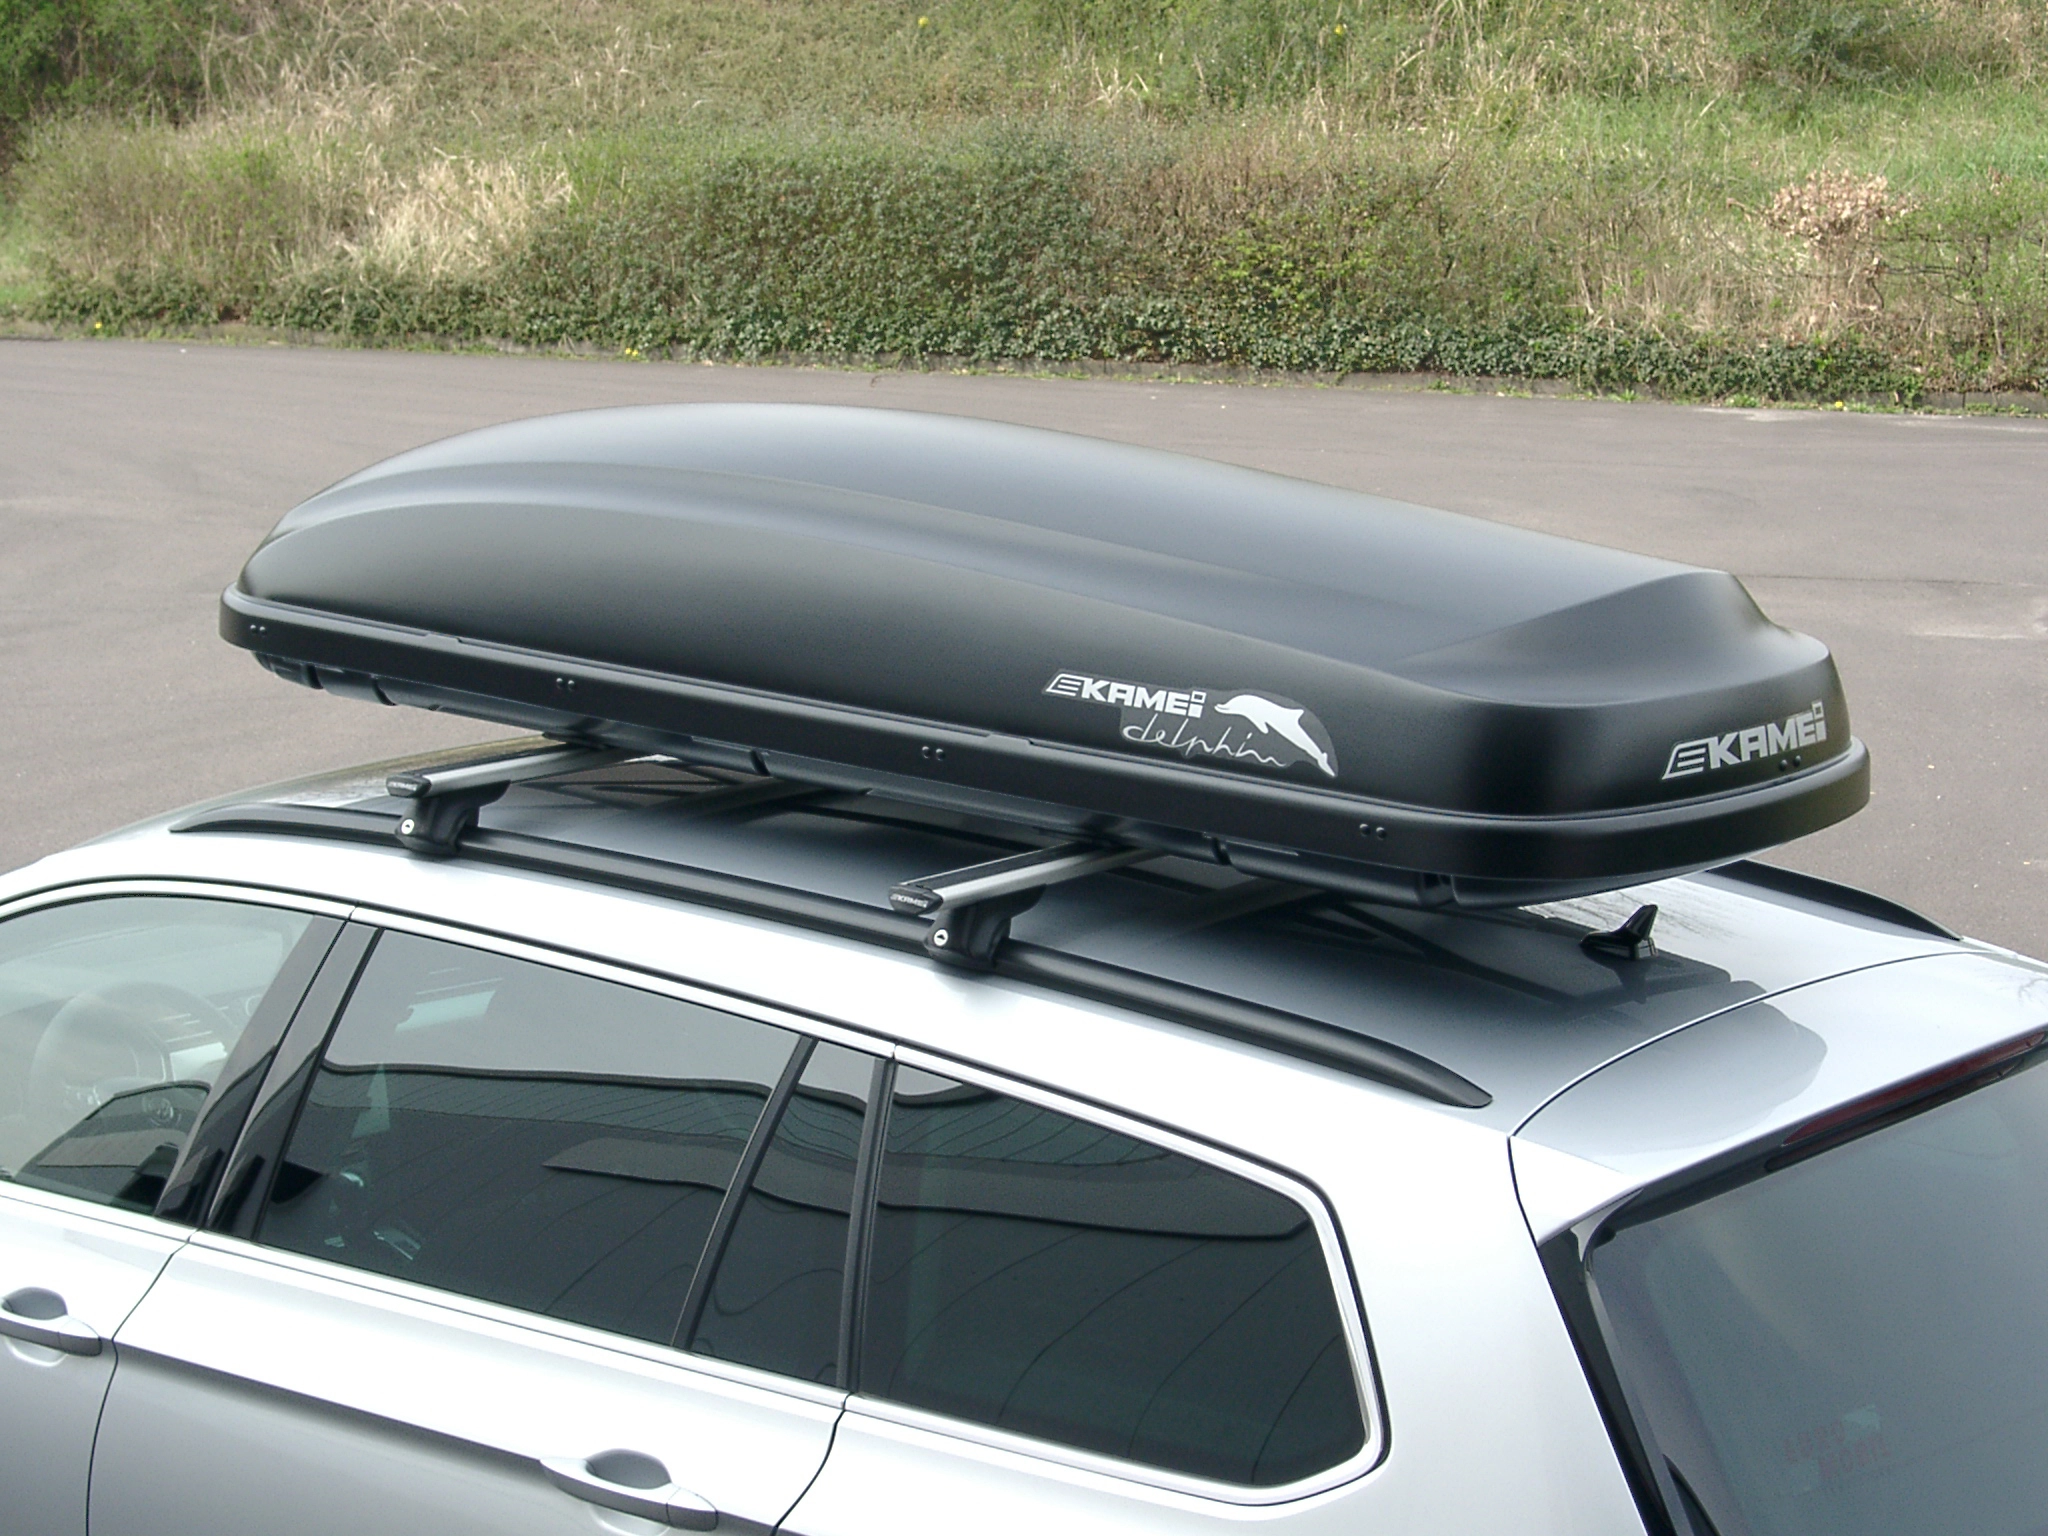 Kamei Auto-Dachbox Delphin 470 l Schwarz matt kaufen bei OBI